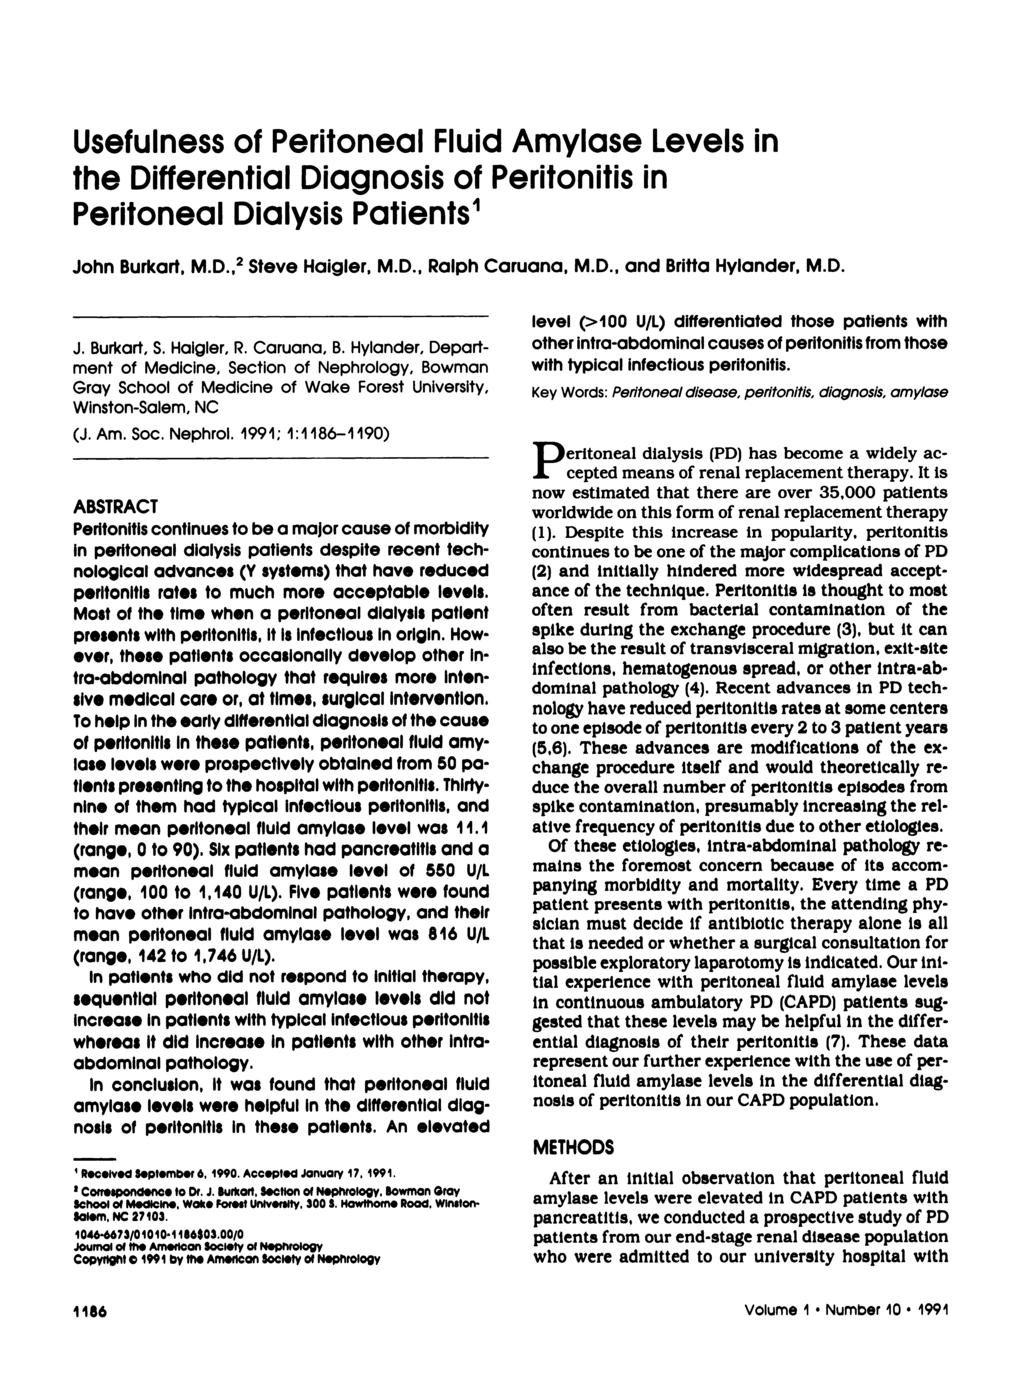 Usefulness of Peritoneal Fluid Levels in the Differential Diagnosis of Peritonitis in Peritoneal Dialysis Patients John Burkart, M.D.,2 Steve Haigler, M.D., Ralph Caruana, M.D., and Britta Hylander, M.